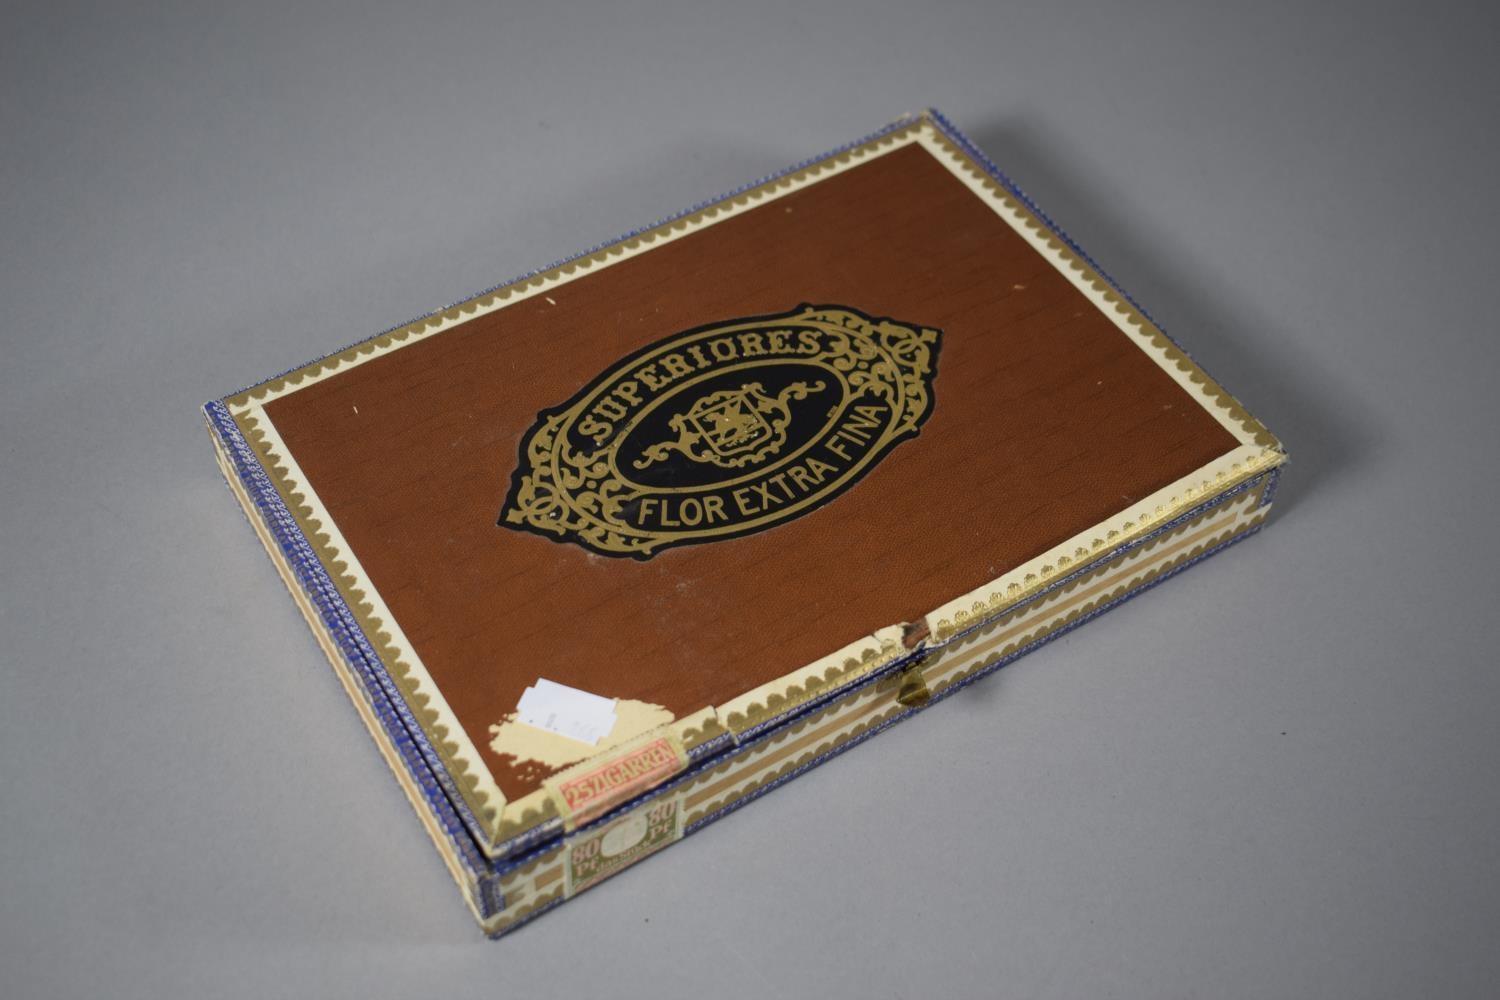 A Box Containing 20 "Superiores Flor Extrafina" Bonia Importas Cuban Cigars. - Image 3 of 3